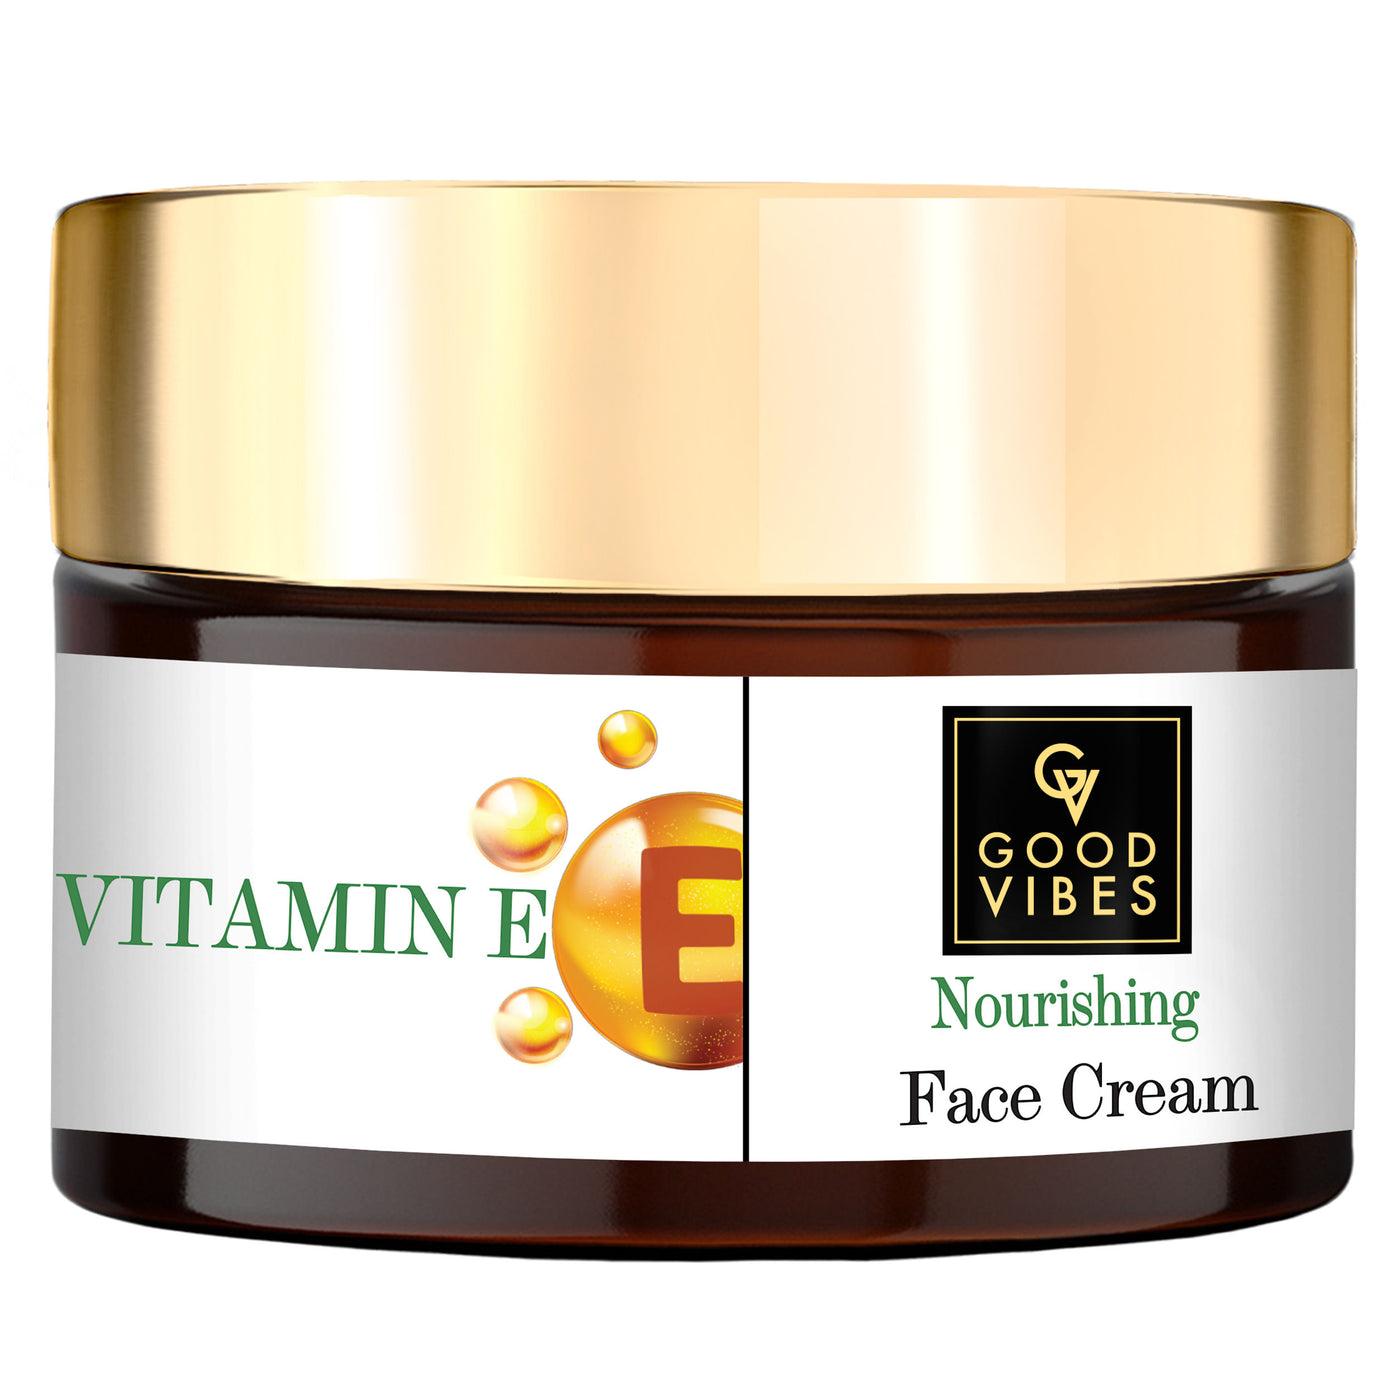 good-vibes-nourishing-face-cream-vitamin-e-50-g-21-73-1